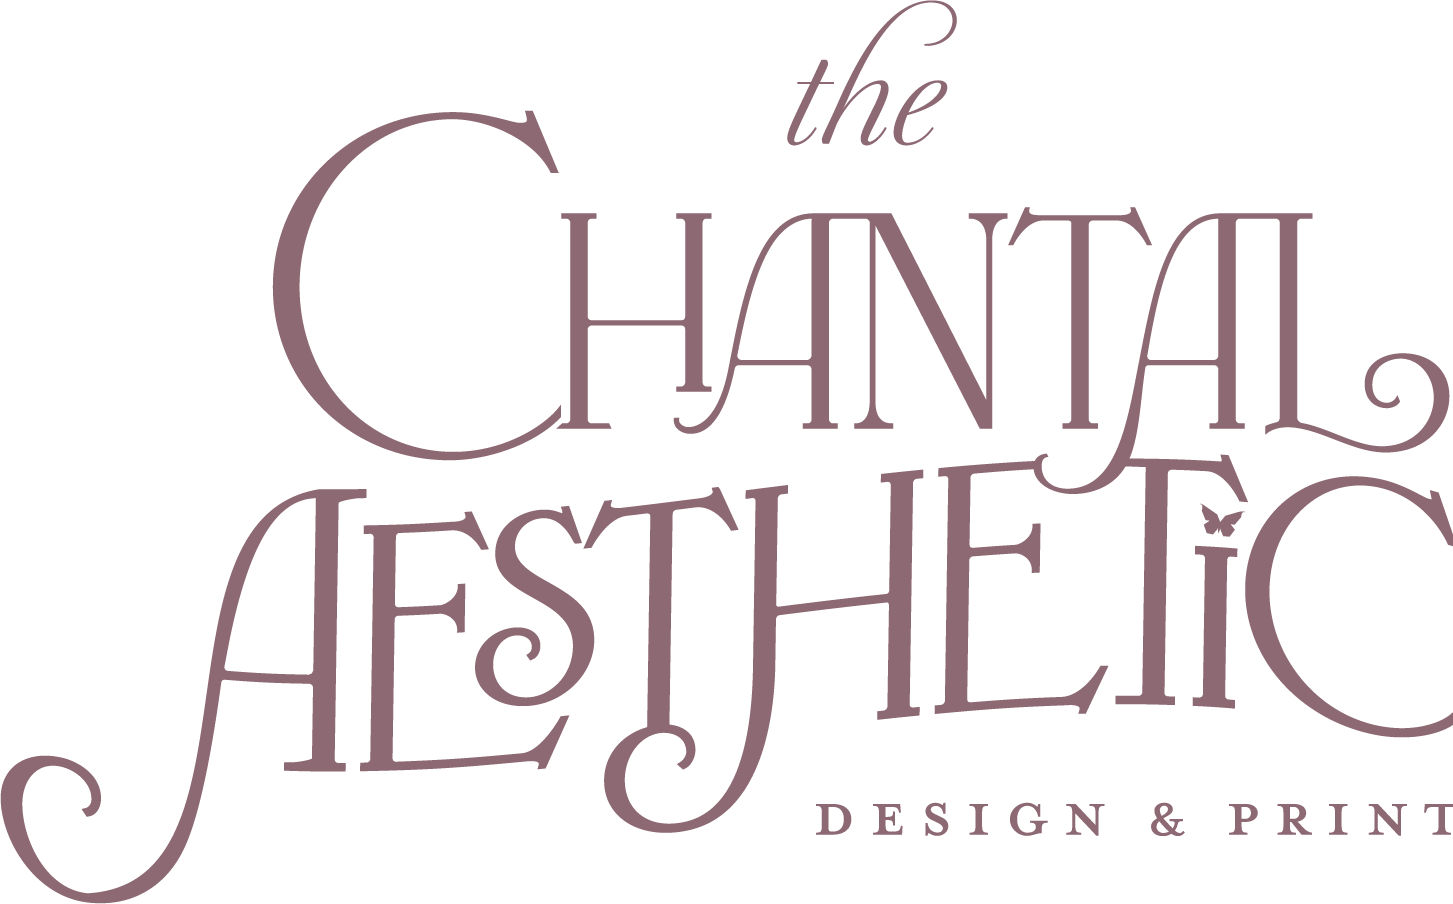 The Chantal Aesthetic: Design & Print